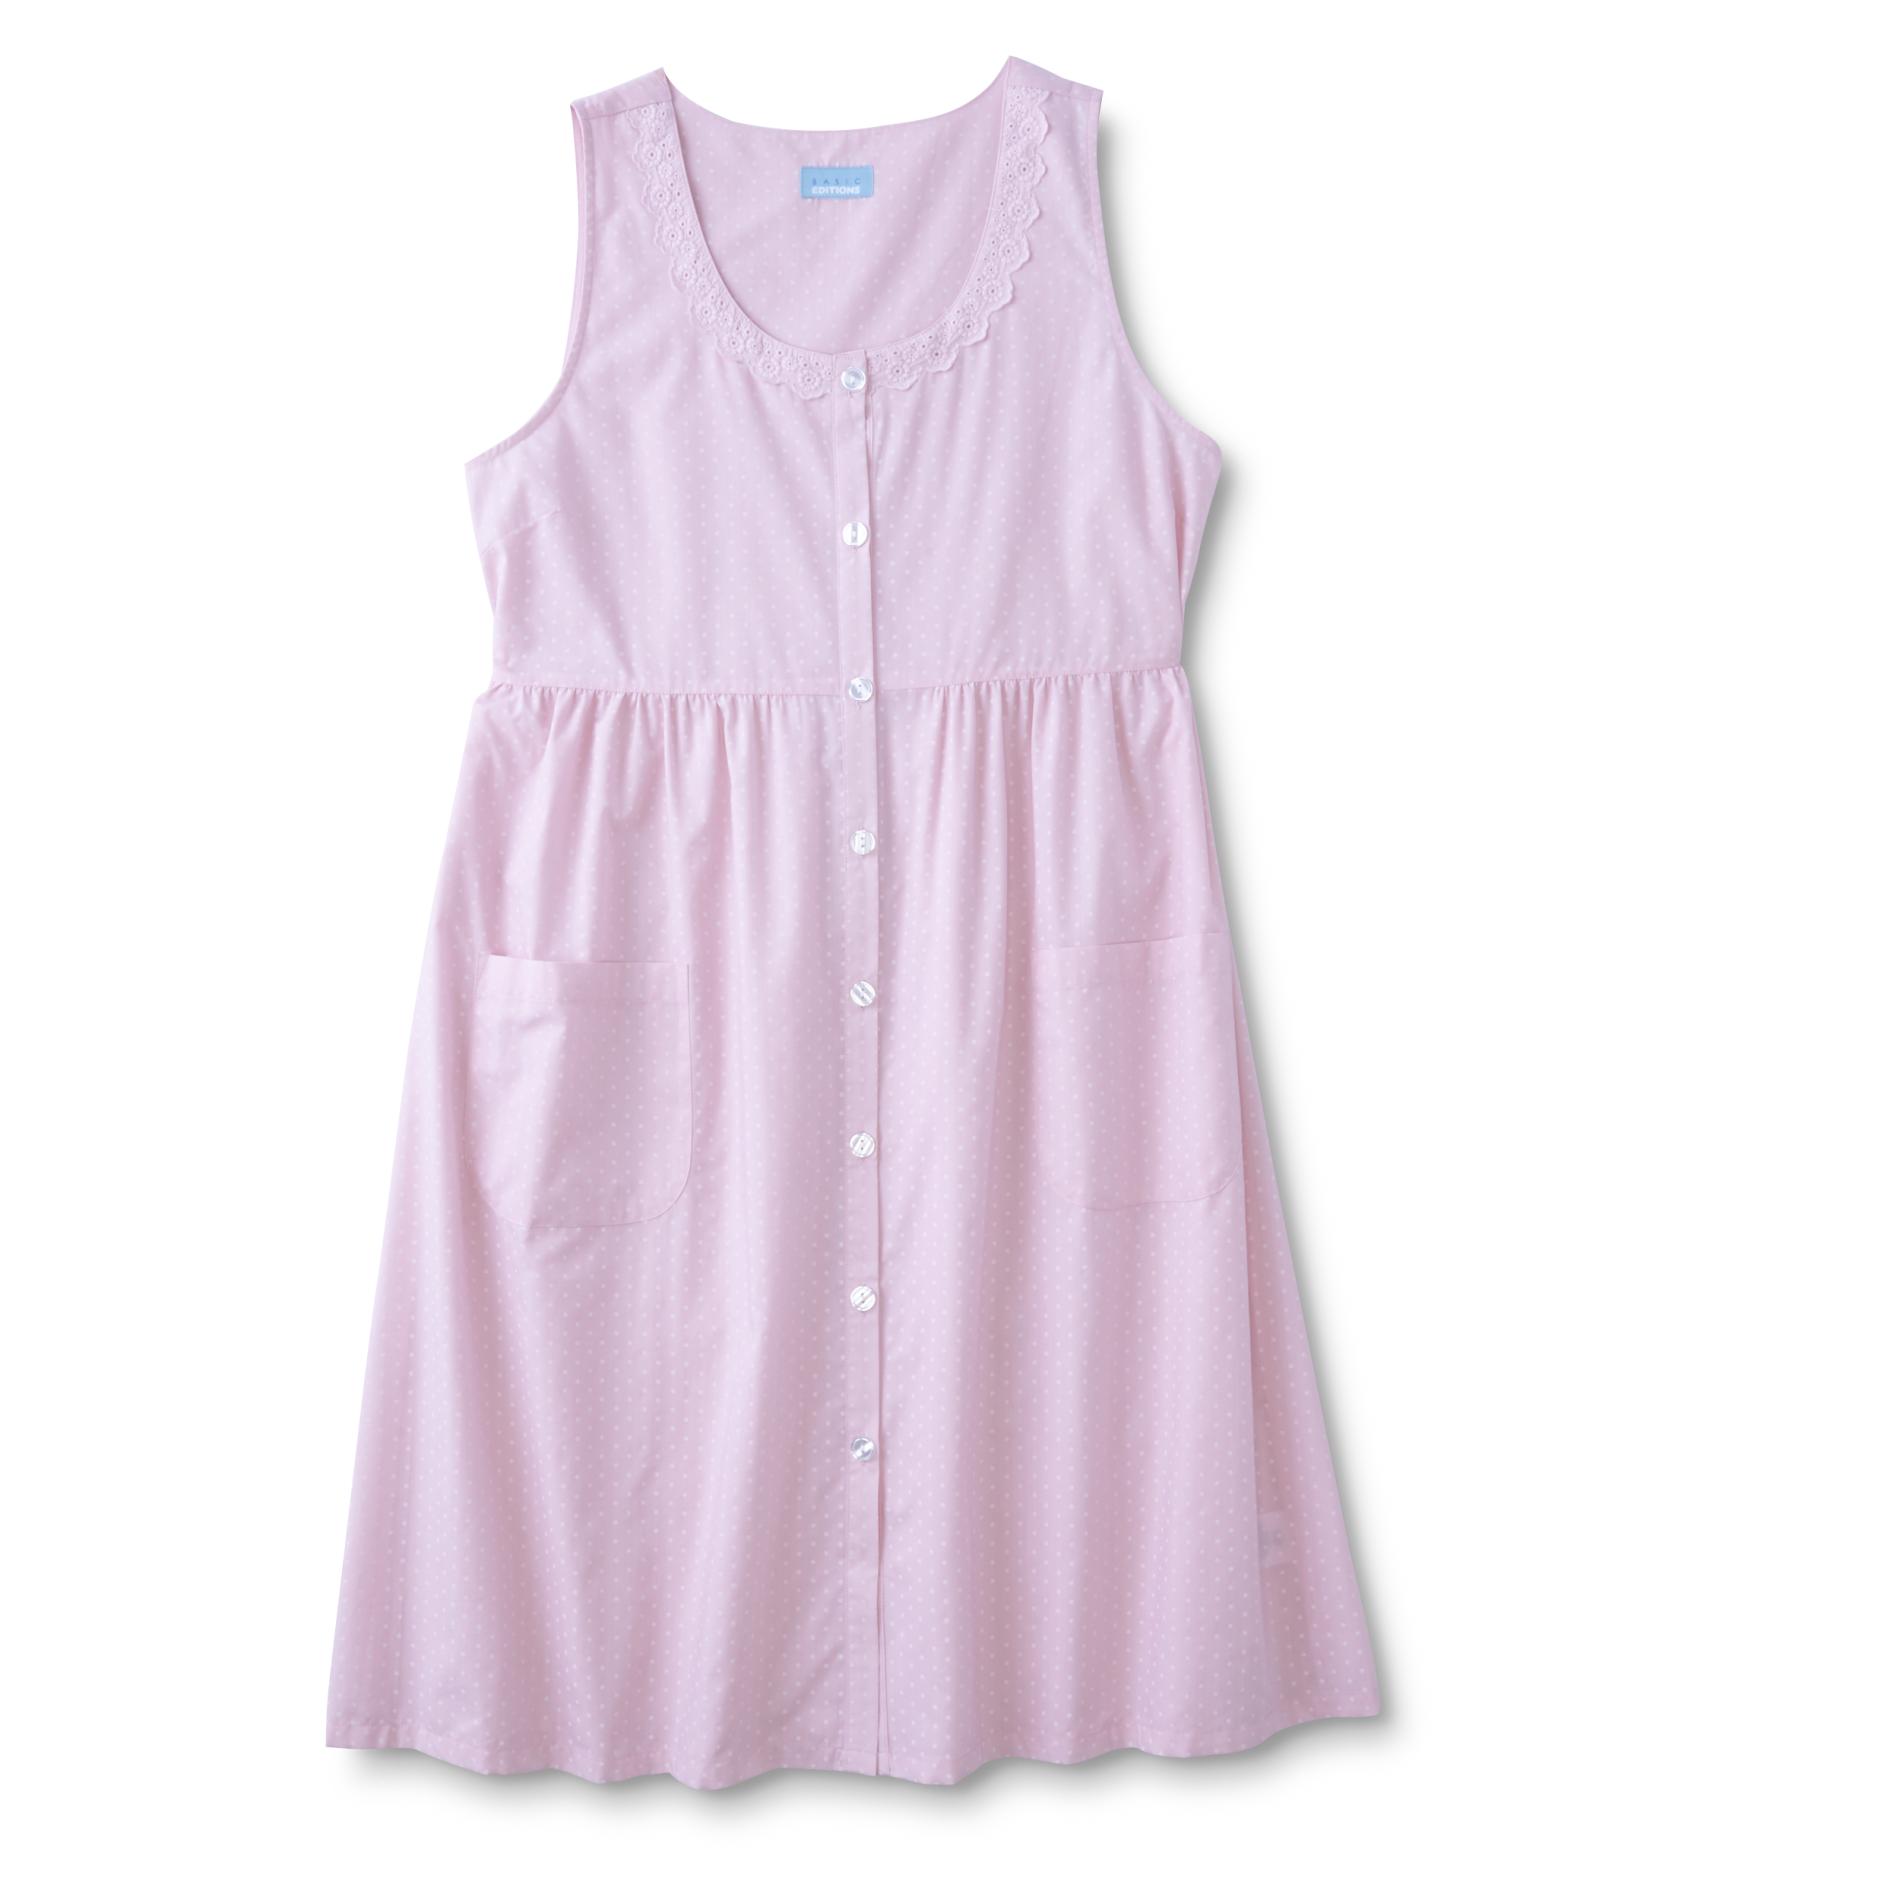 Basic Editions Women's Plus Sleeveless Nightgown - Dots